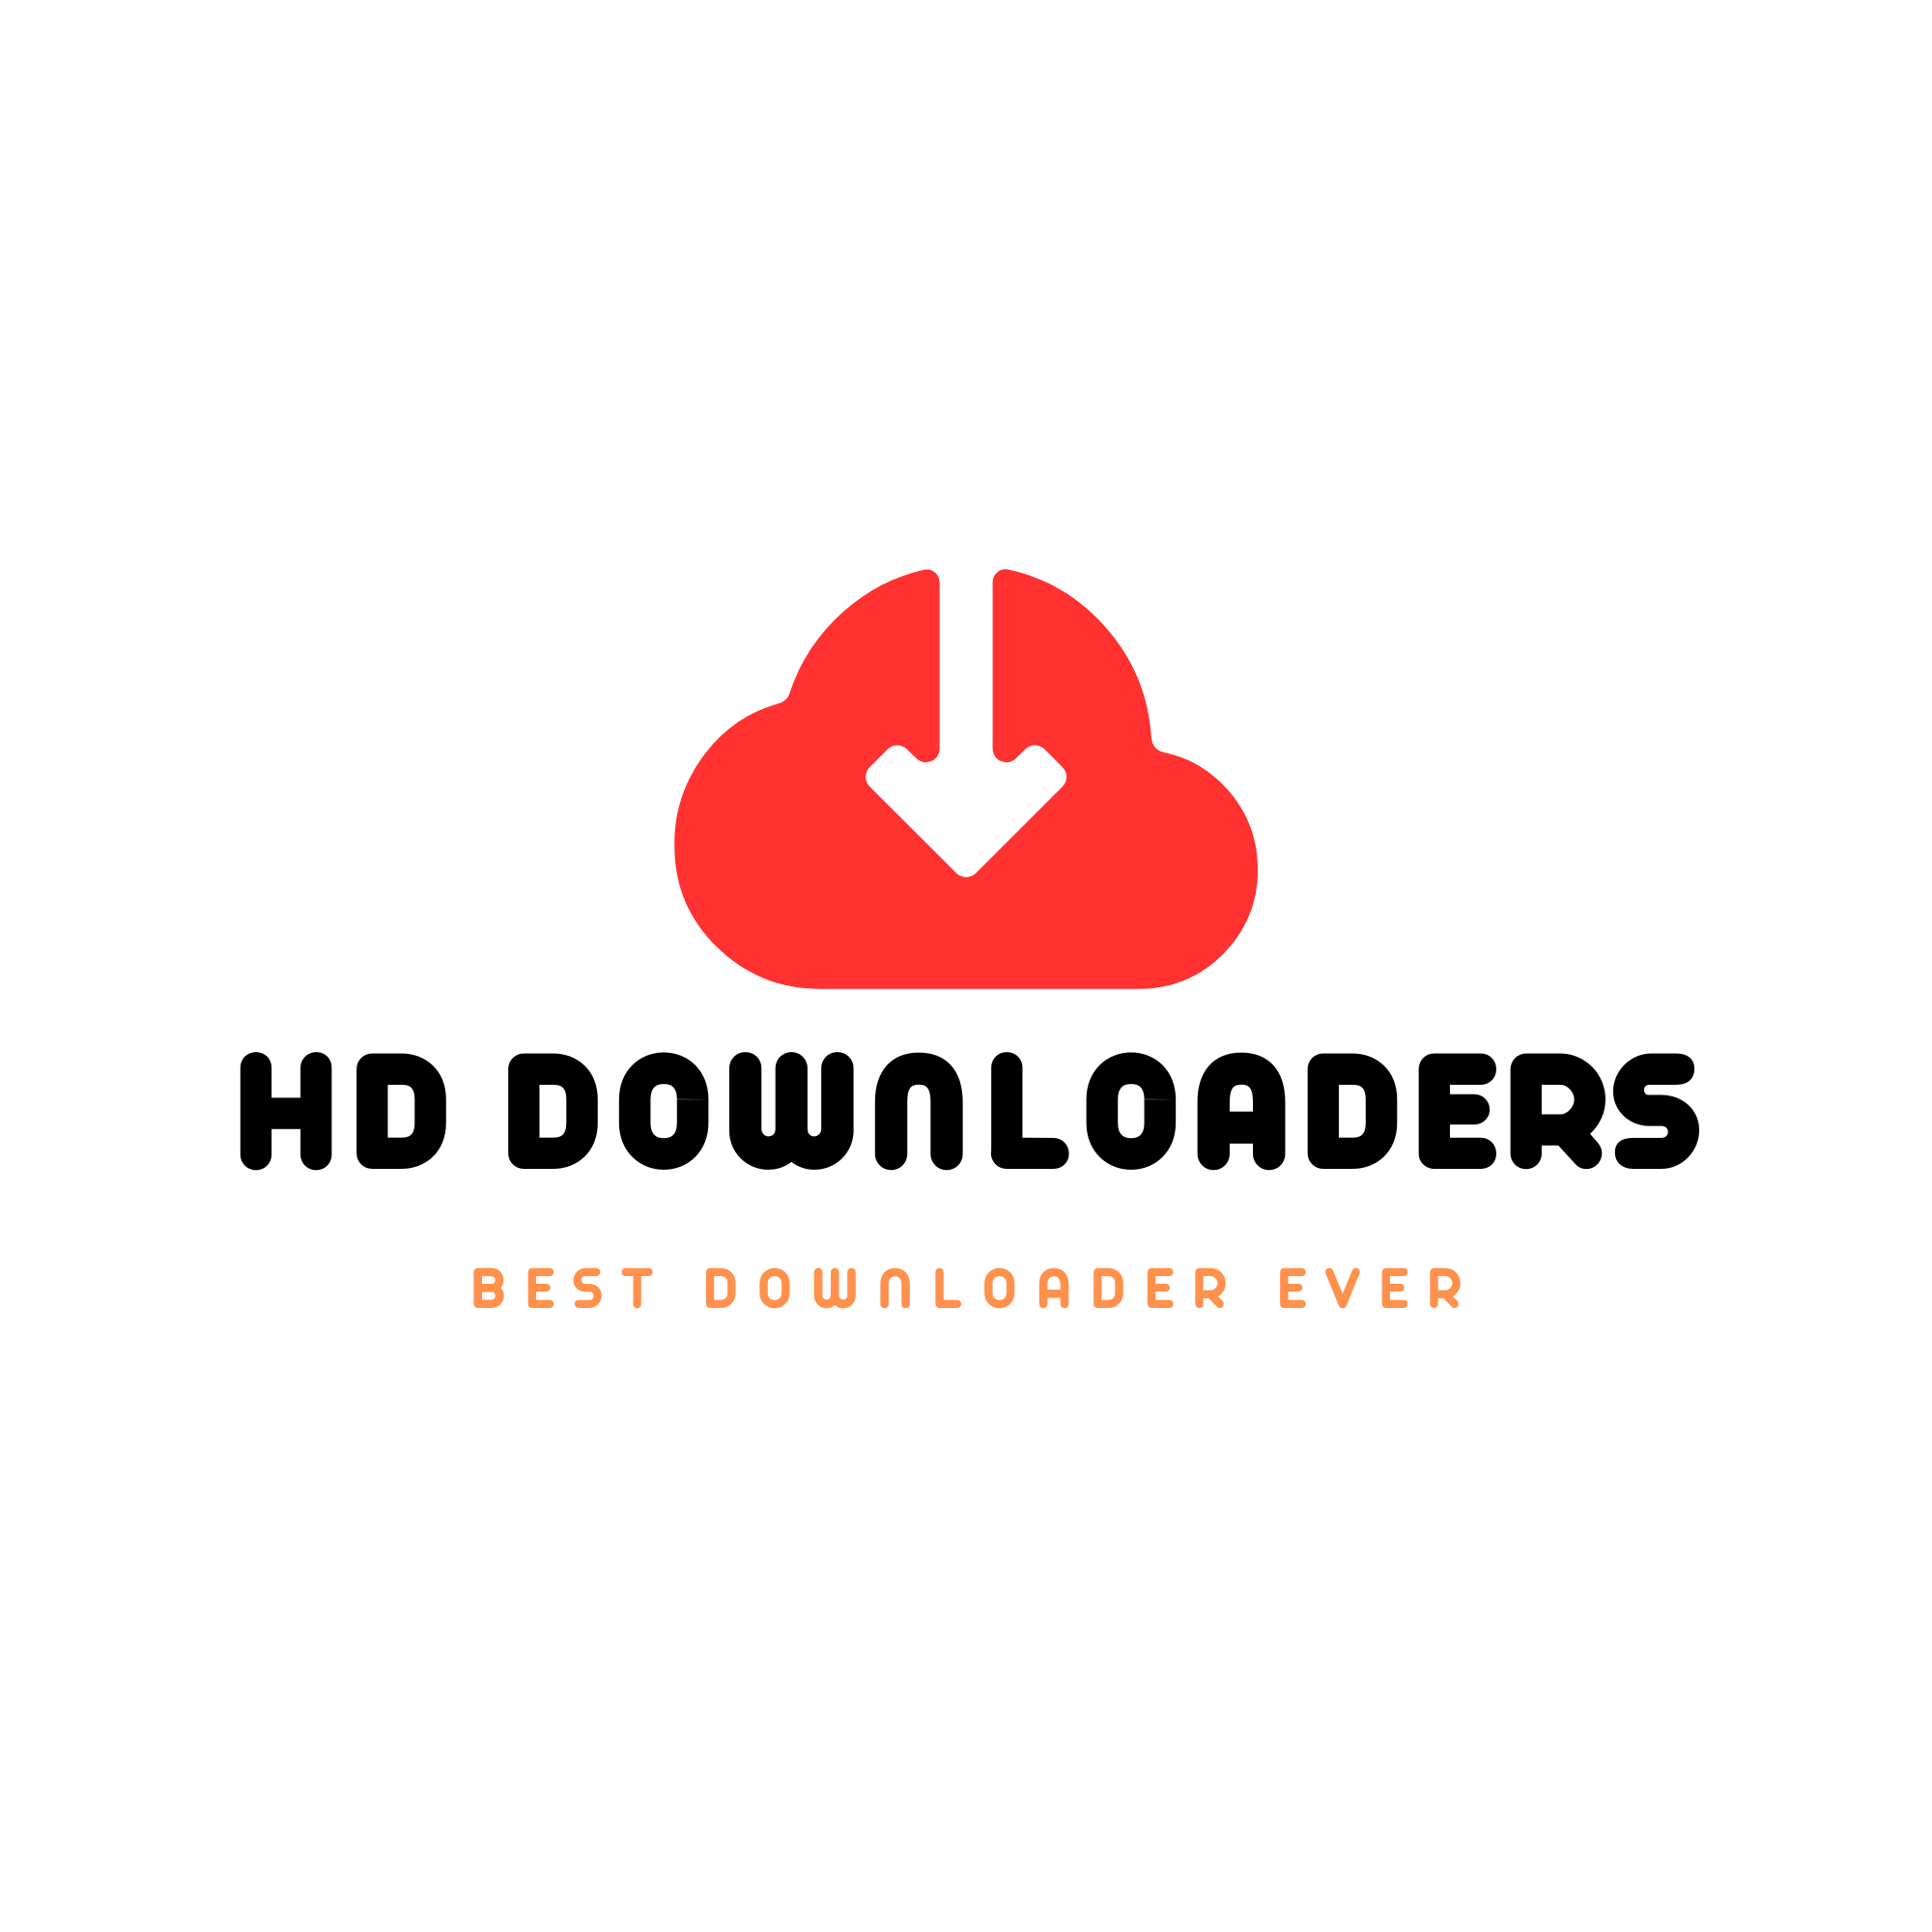 HD Downloader logo